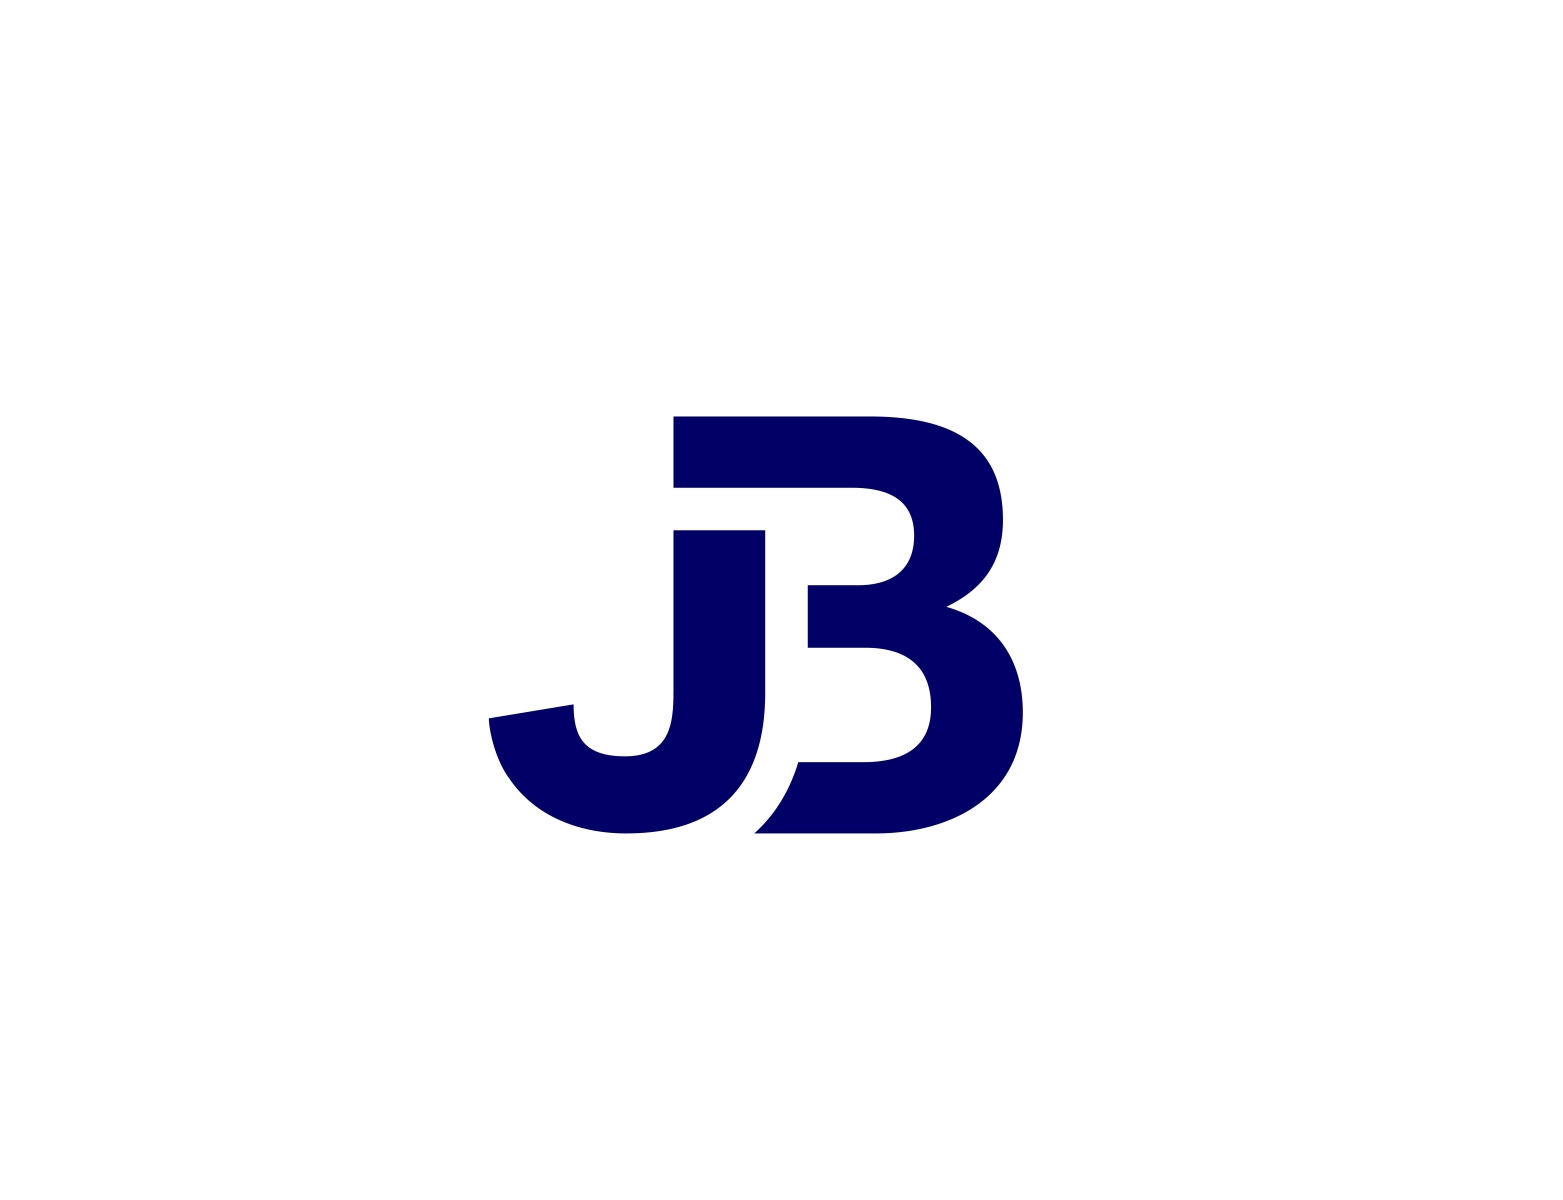 JB Logo or BJ Logo by Sabuj Ali on Dribbble